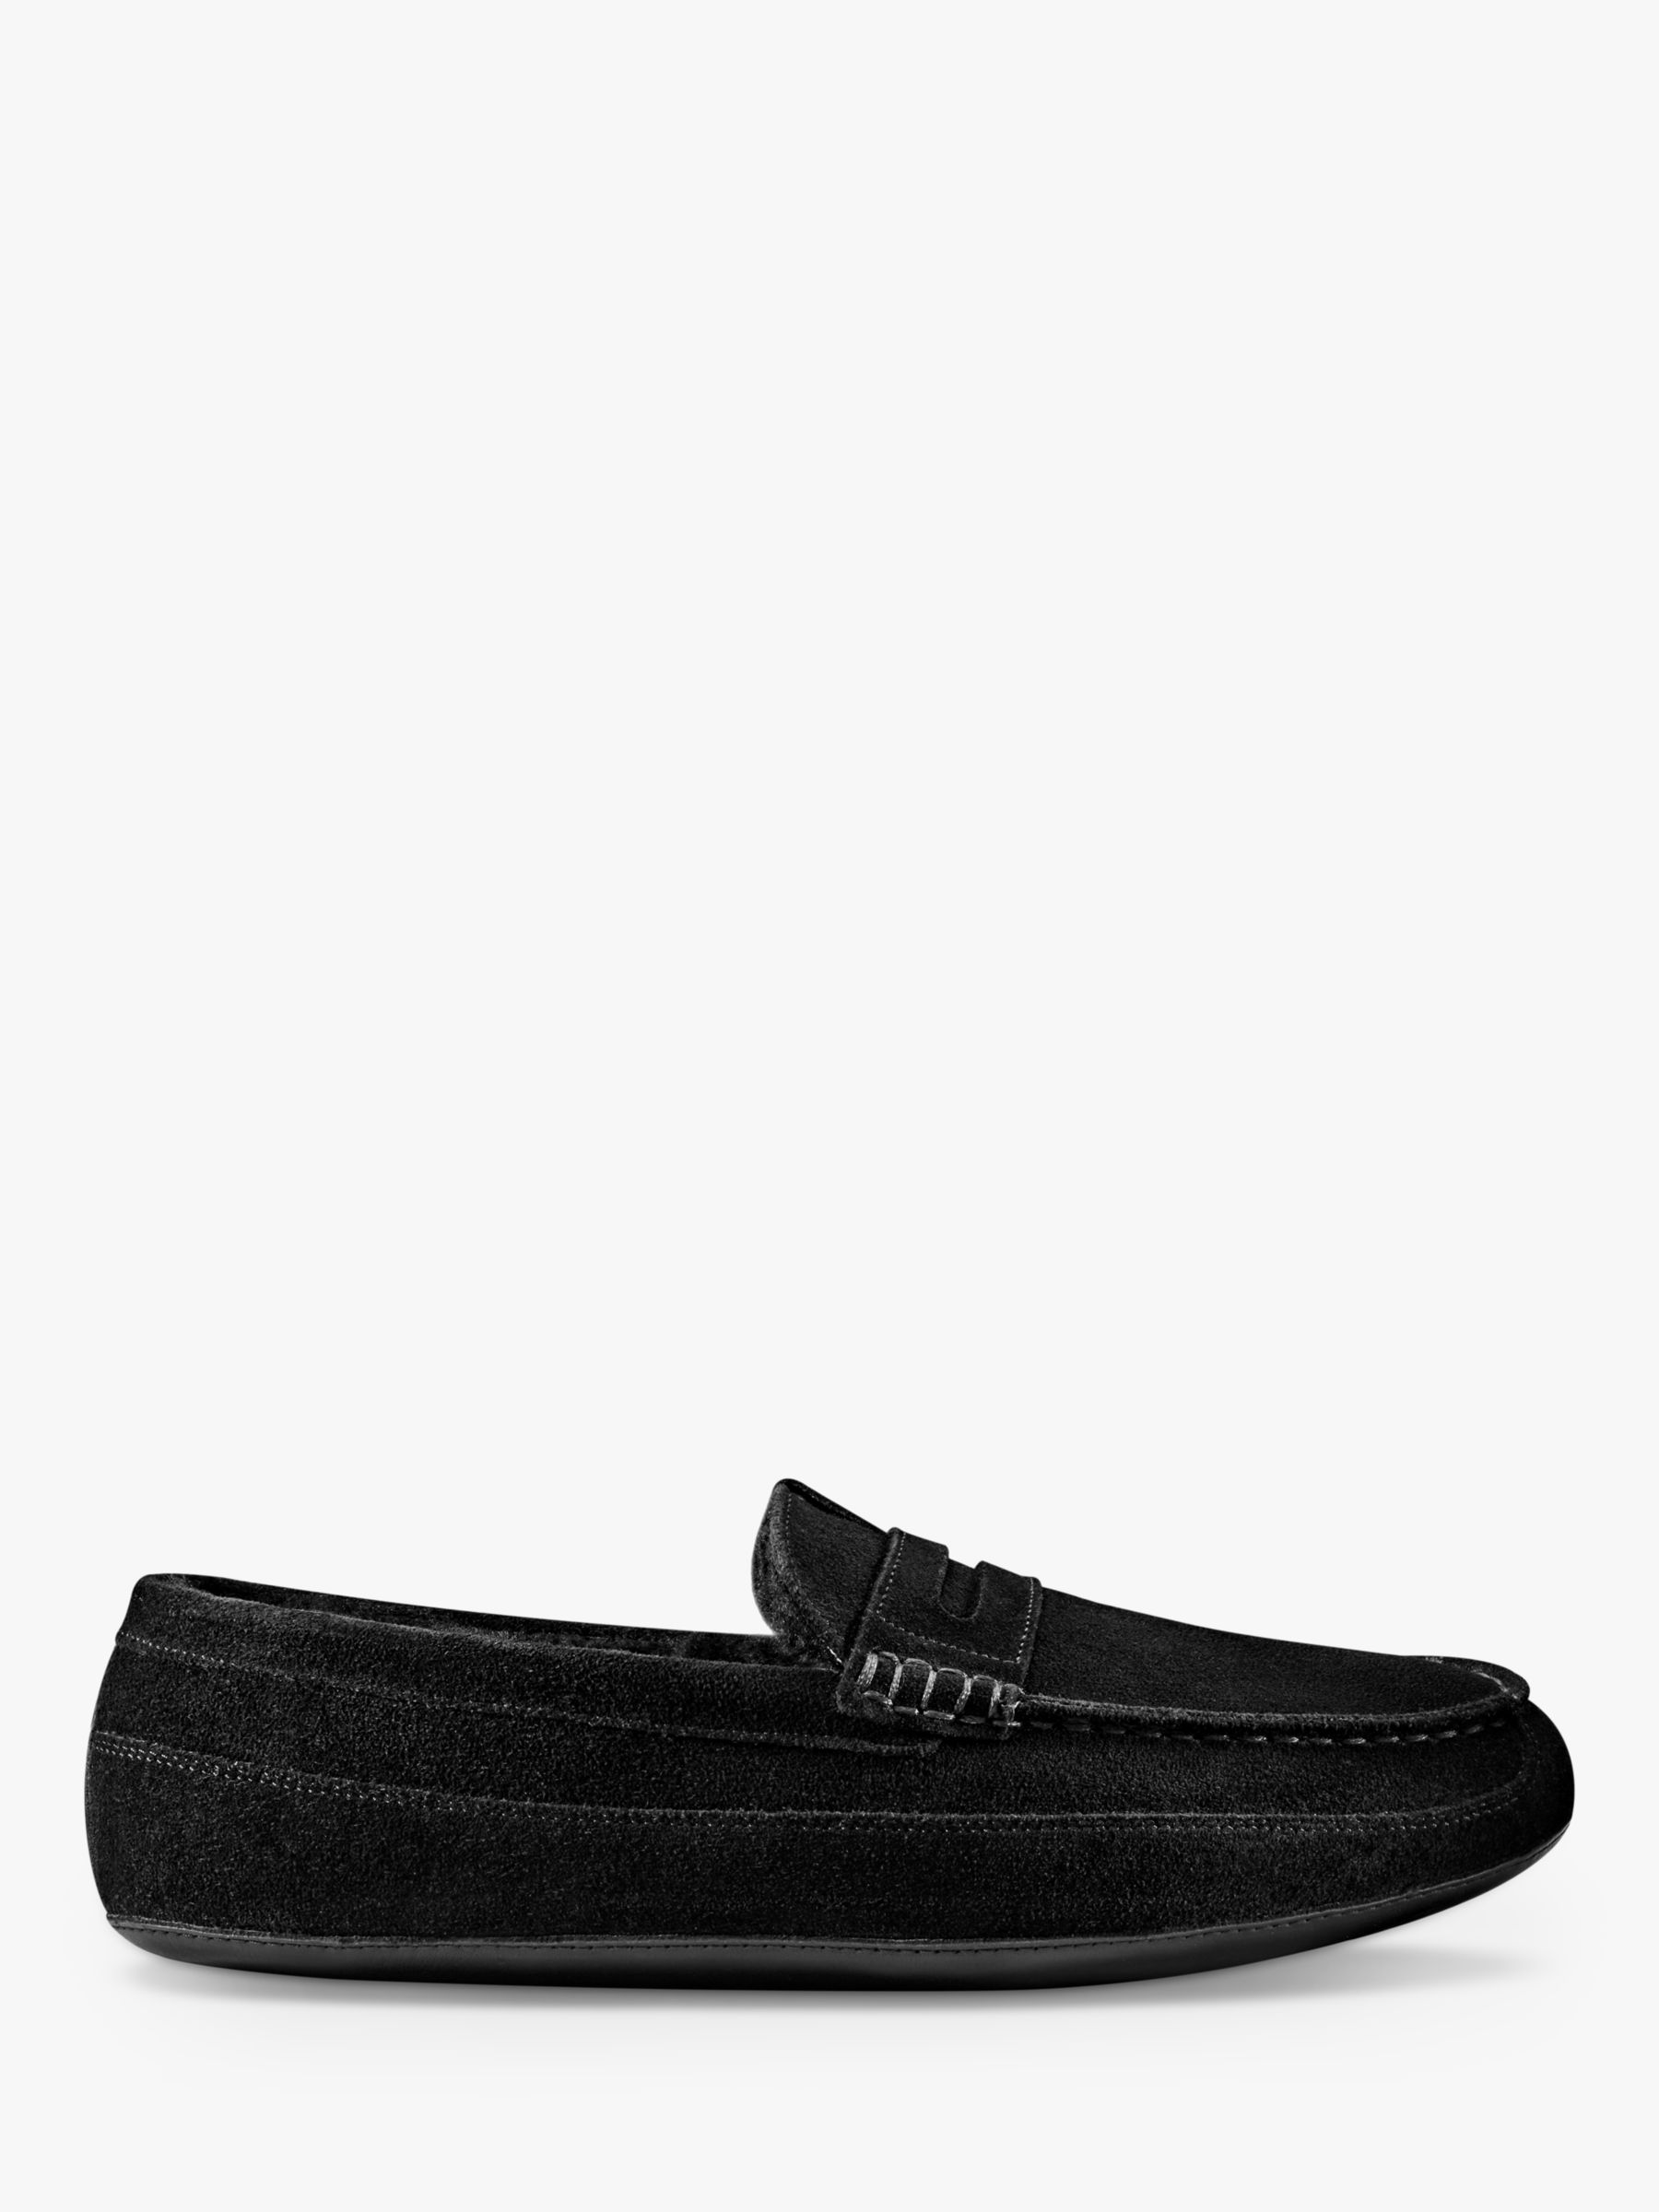 black suede slippers